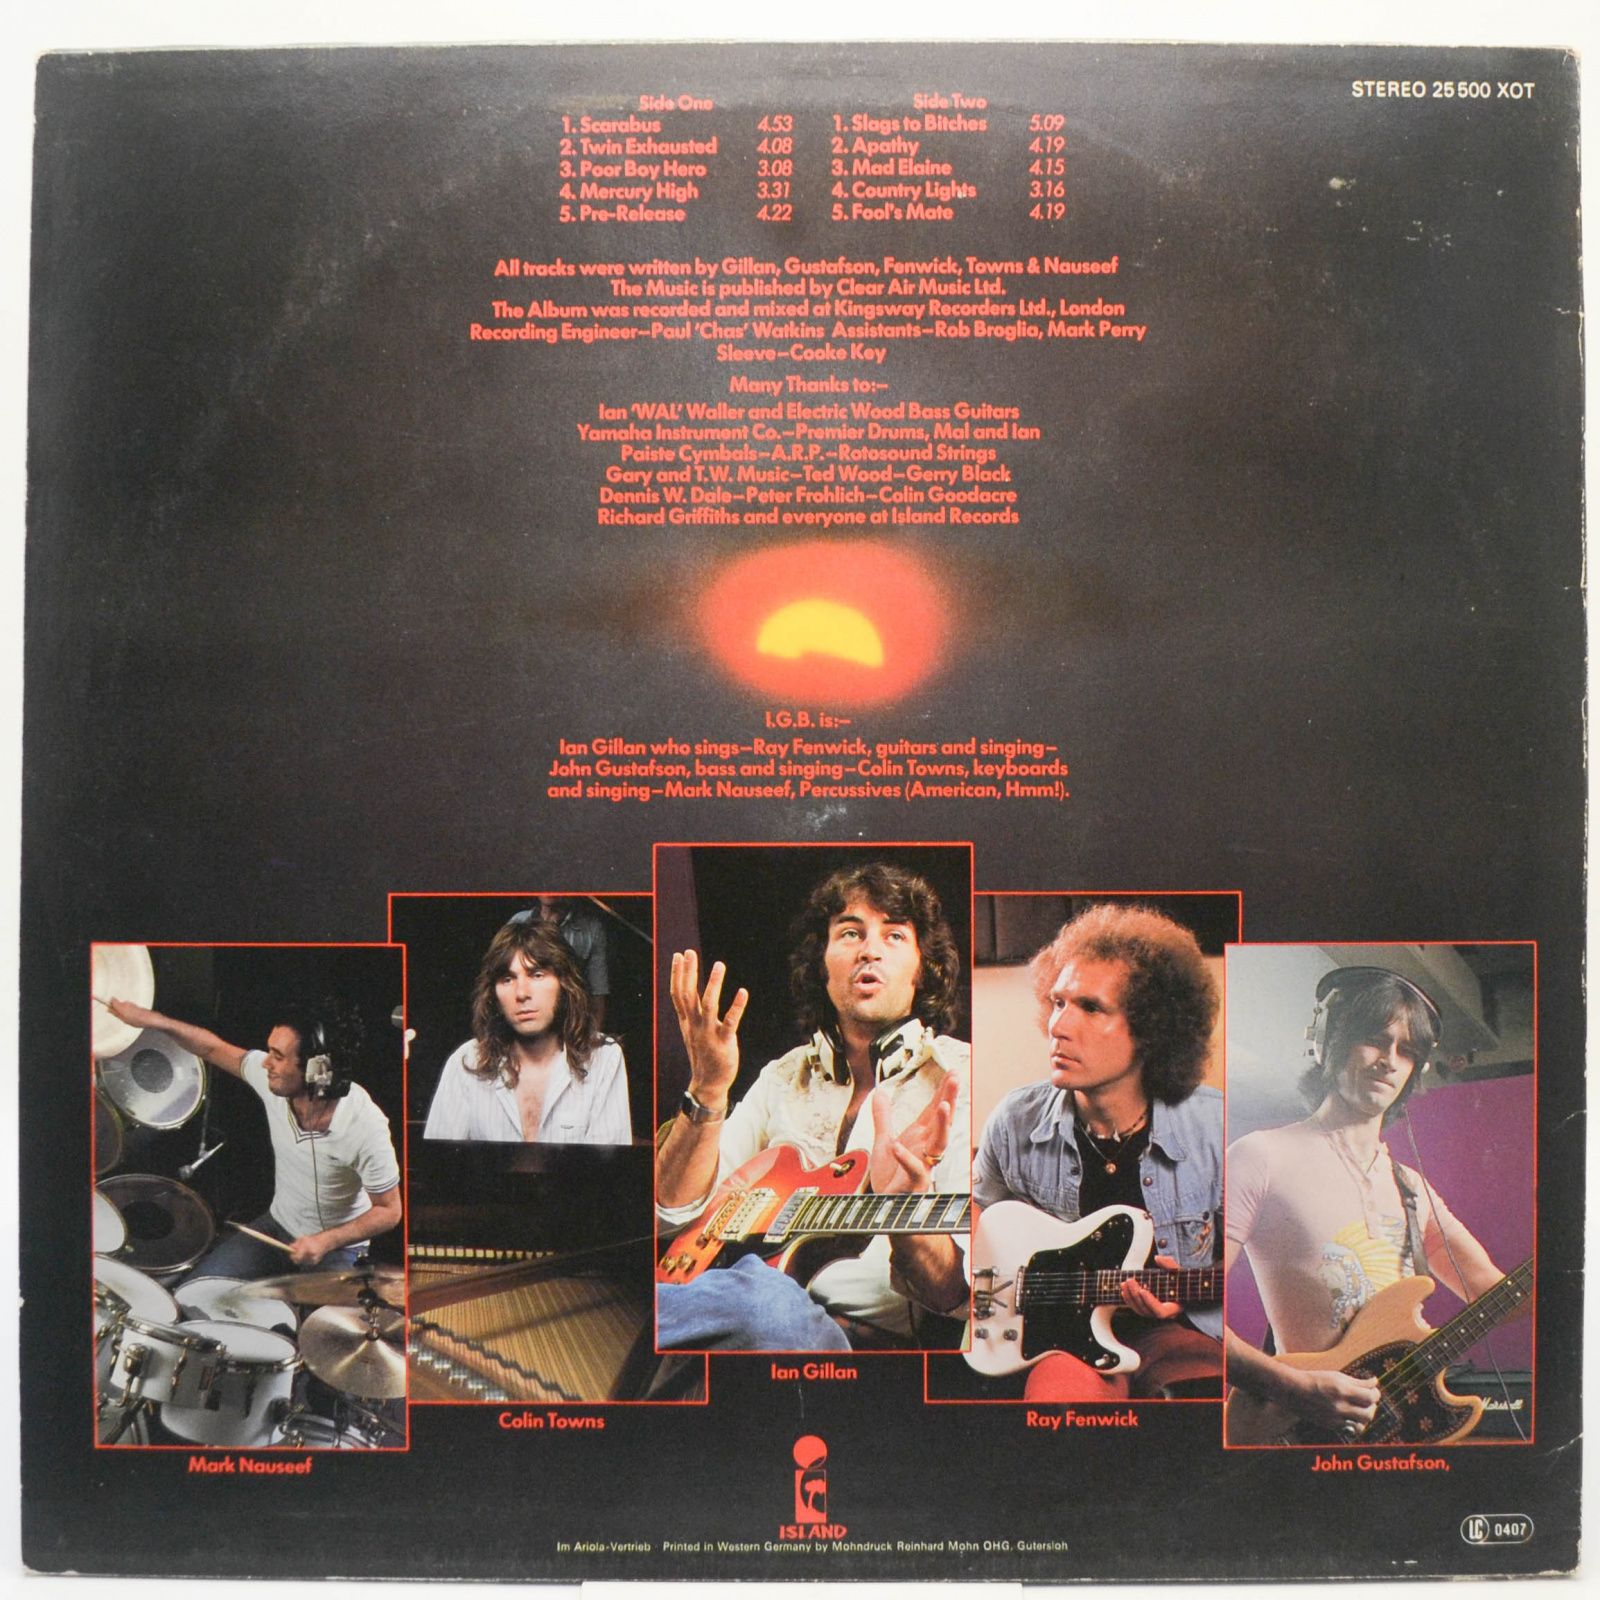 Ian Gillan Band — Scarabus, 1977